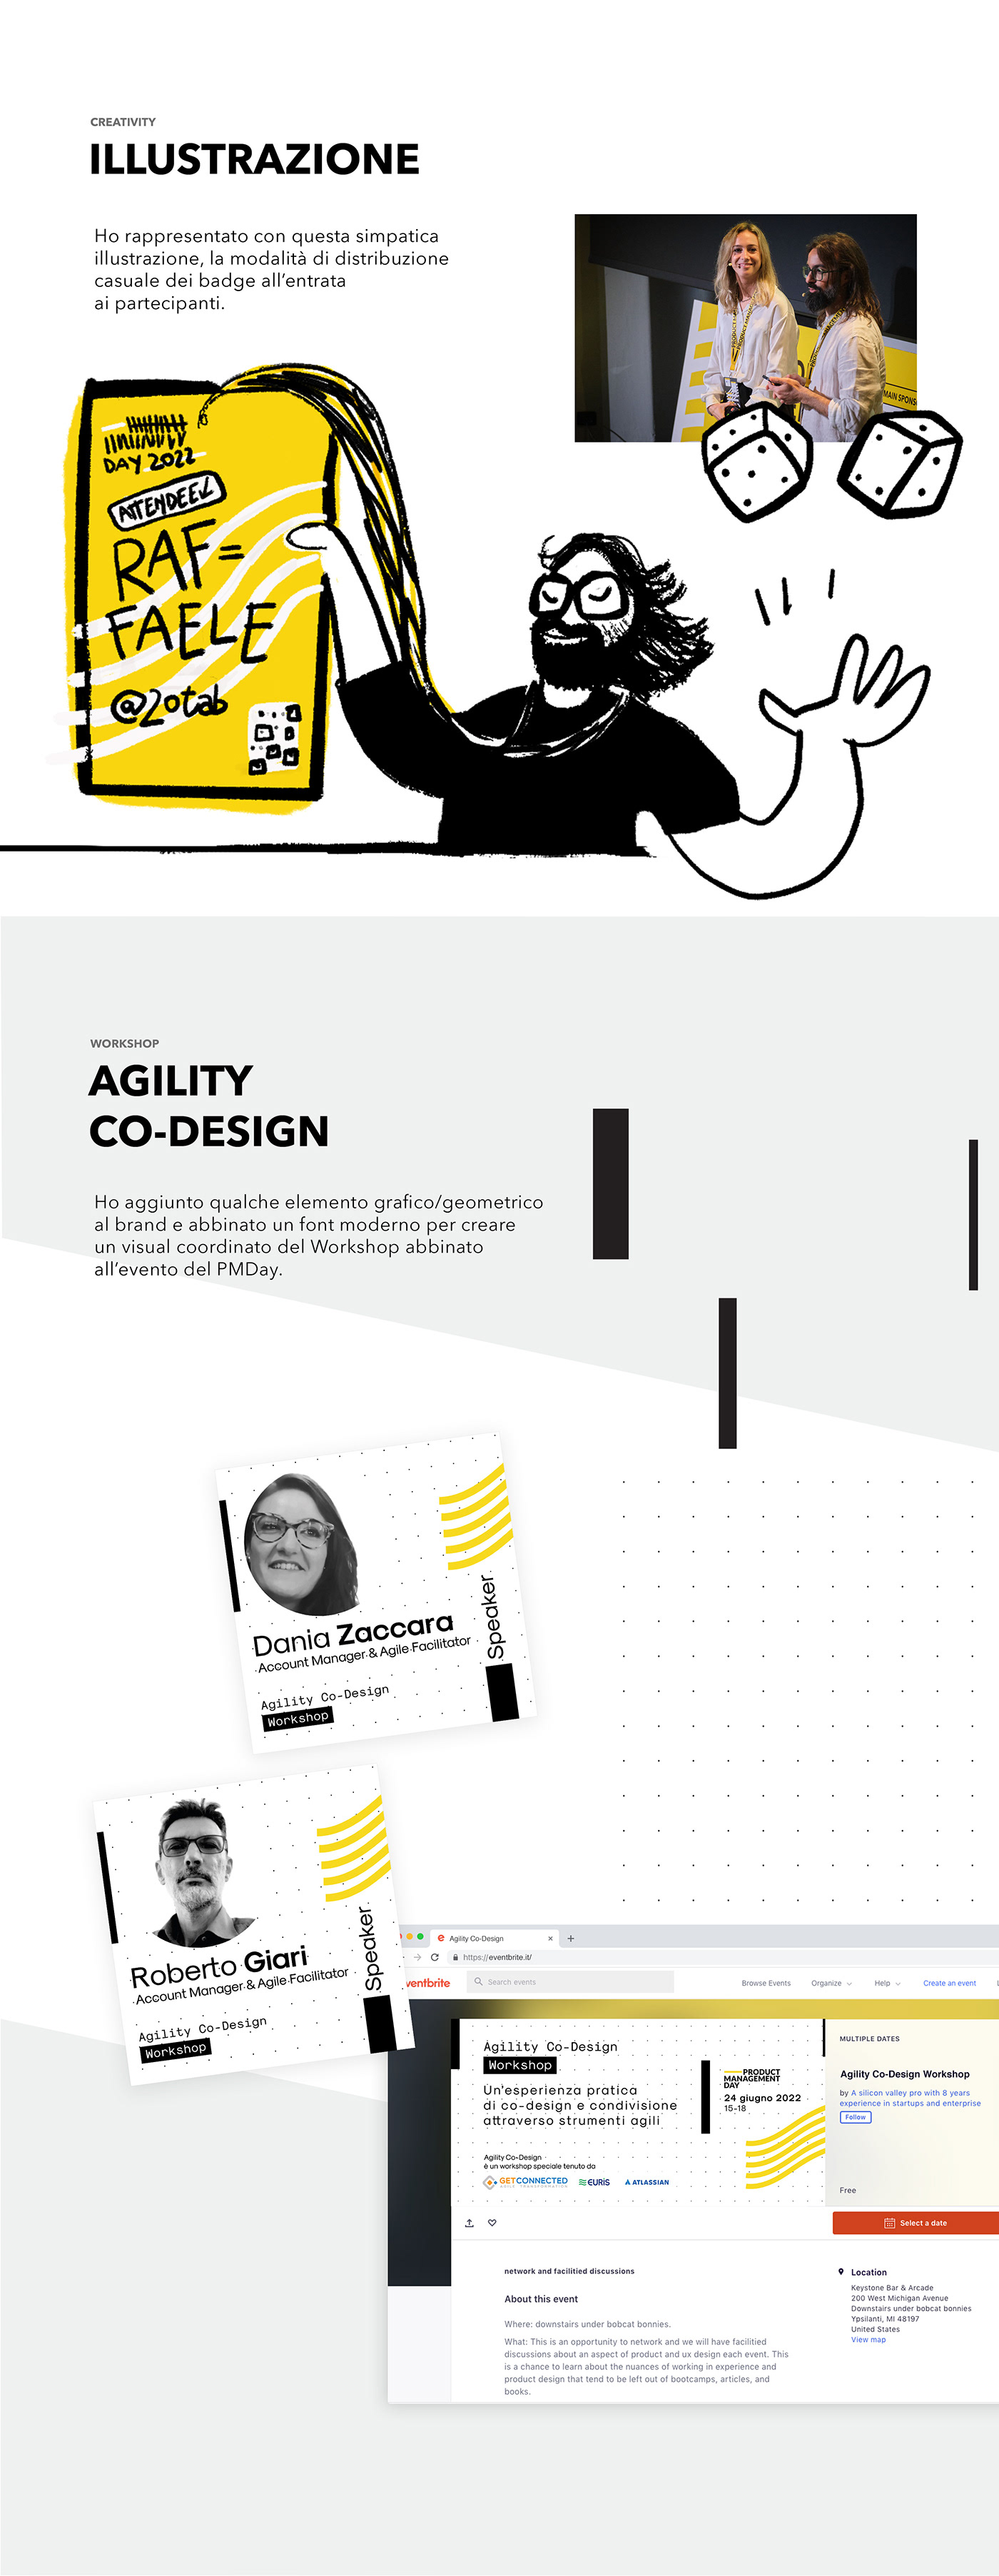 Brand Design Corporate Identity Digital Art  graphic design  Product Management Day visual identity